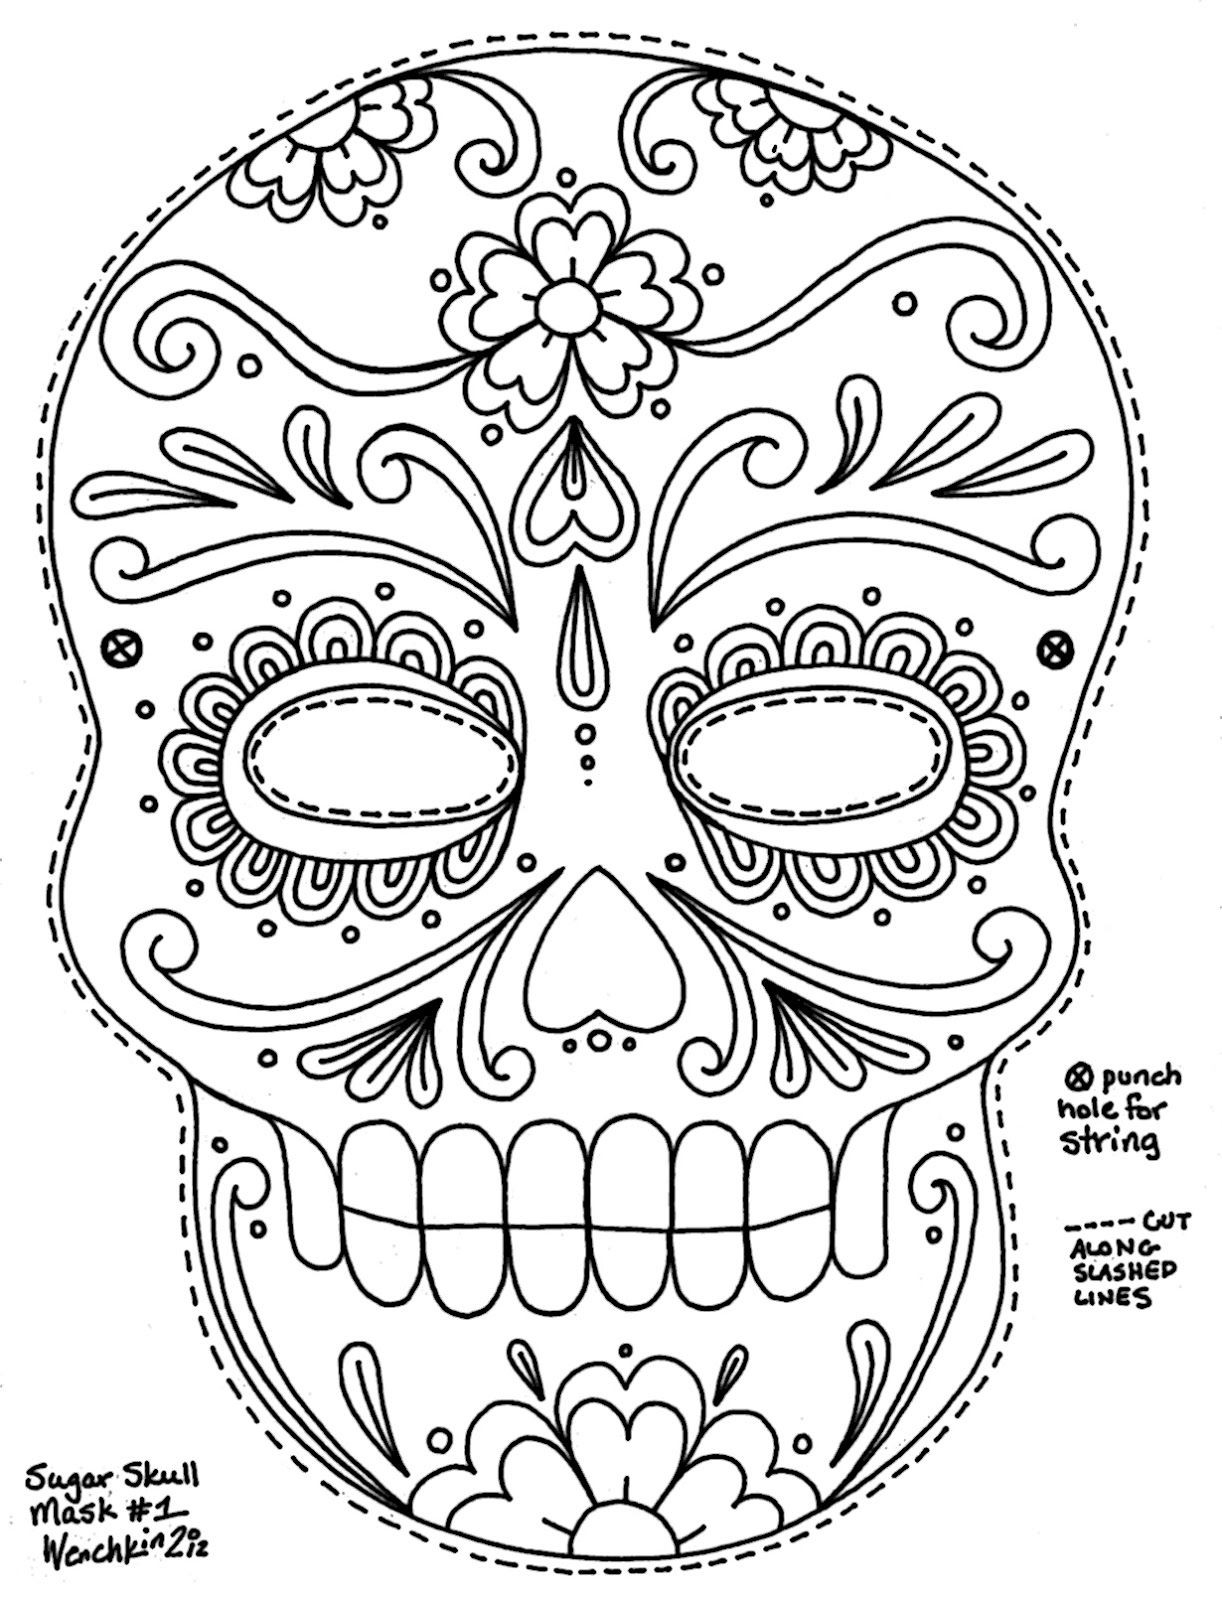 Human Skeleton Coloring Pages Skeleton Face Coloring Page Awesome Human Skeleton Coloring Pages